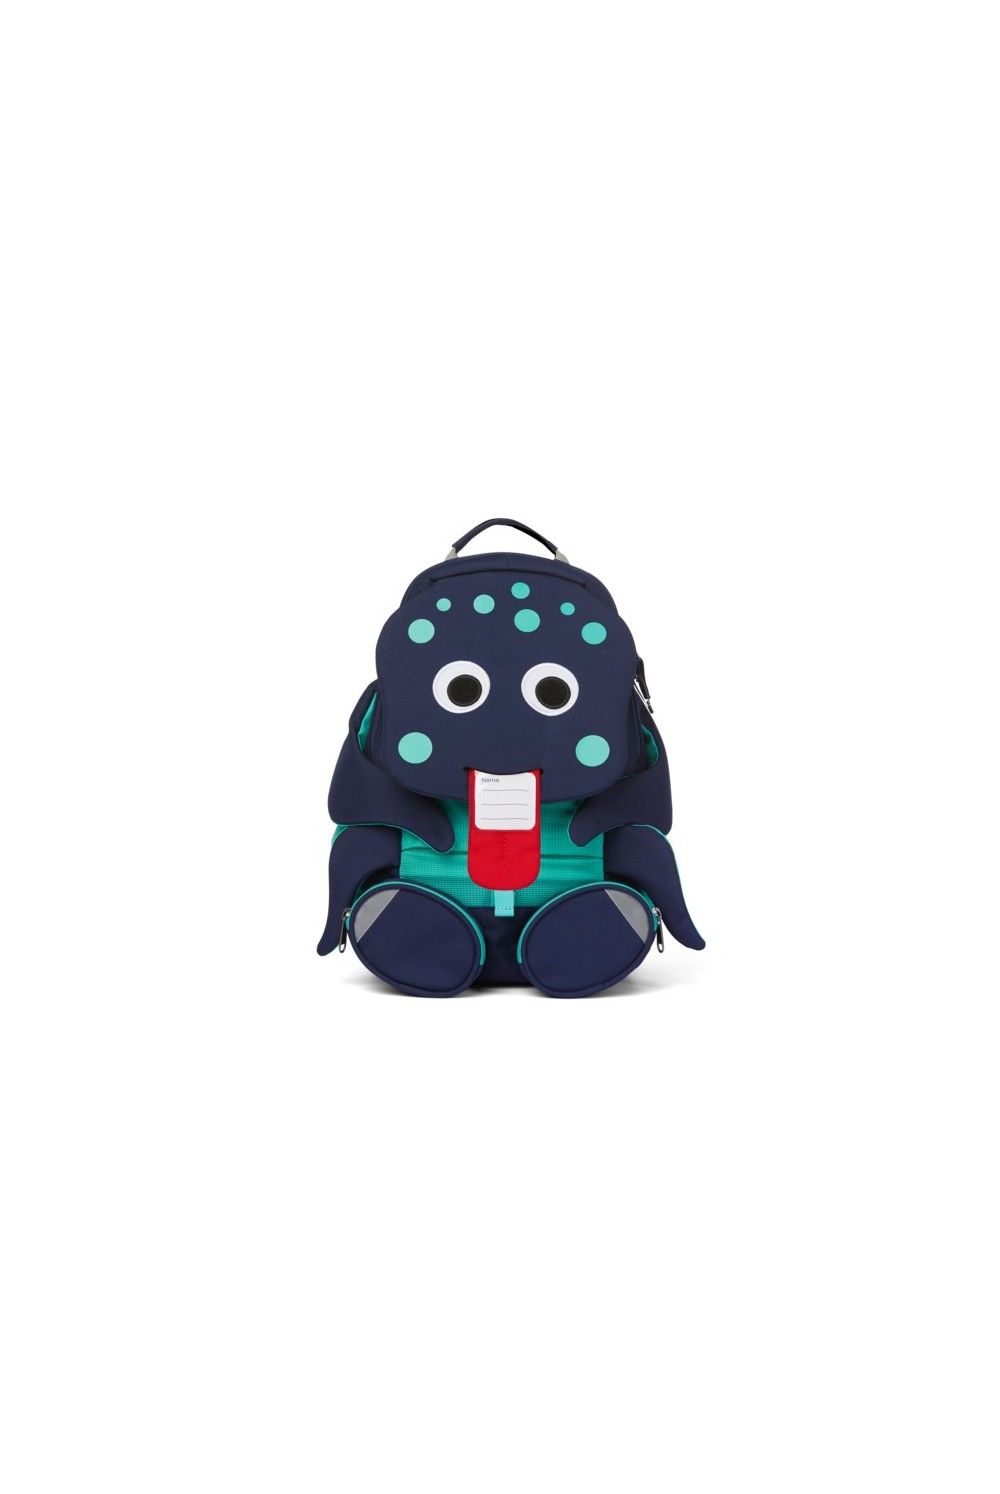 Children backpack Affenzahn big friend Octopus